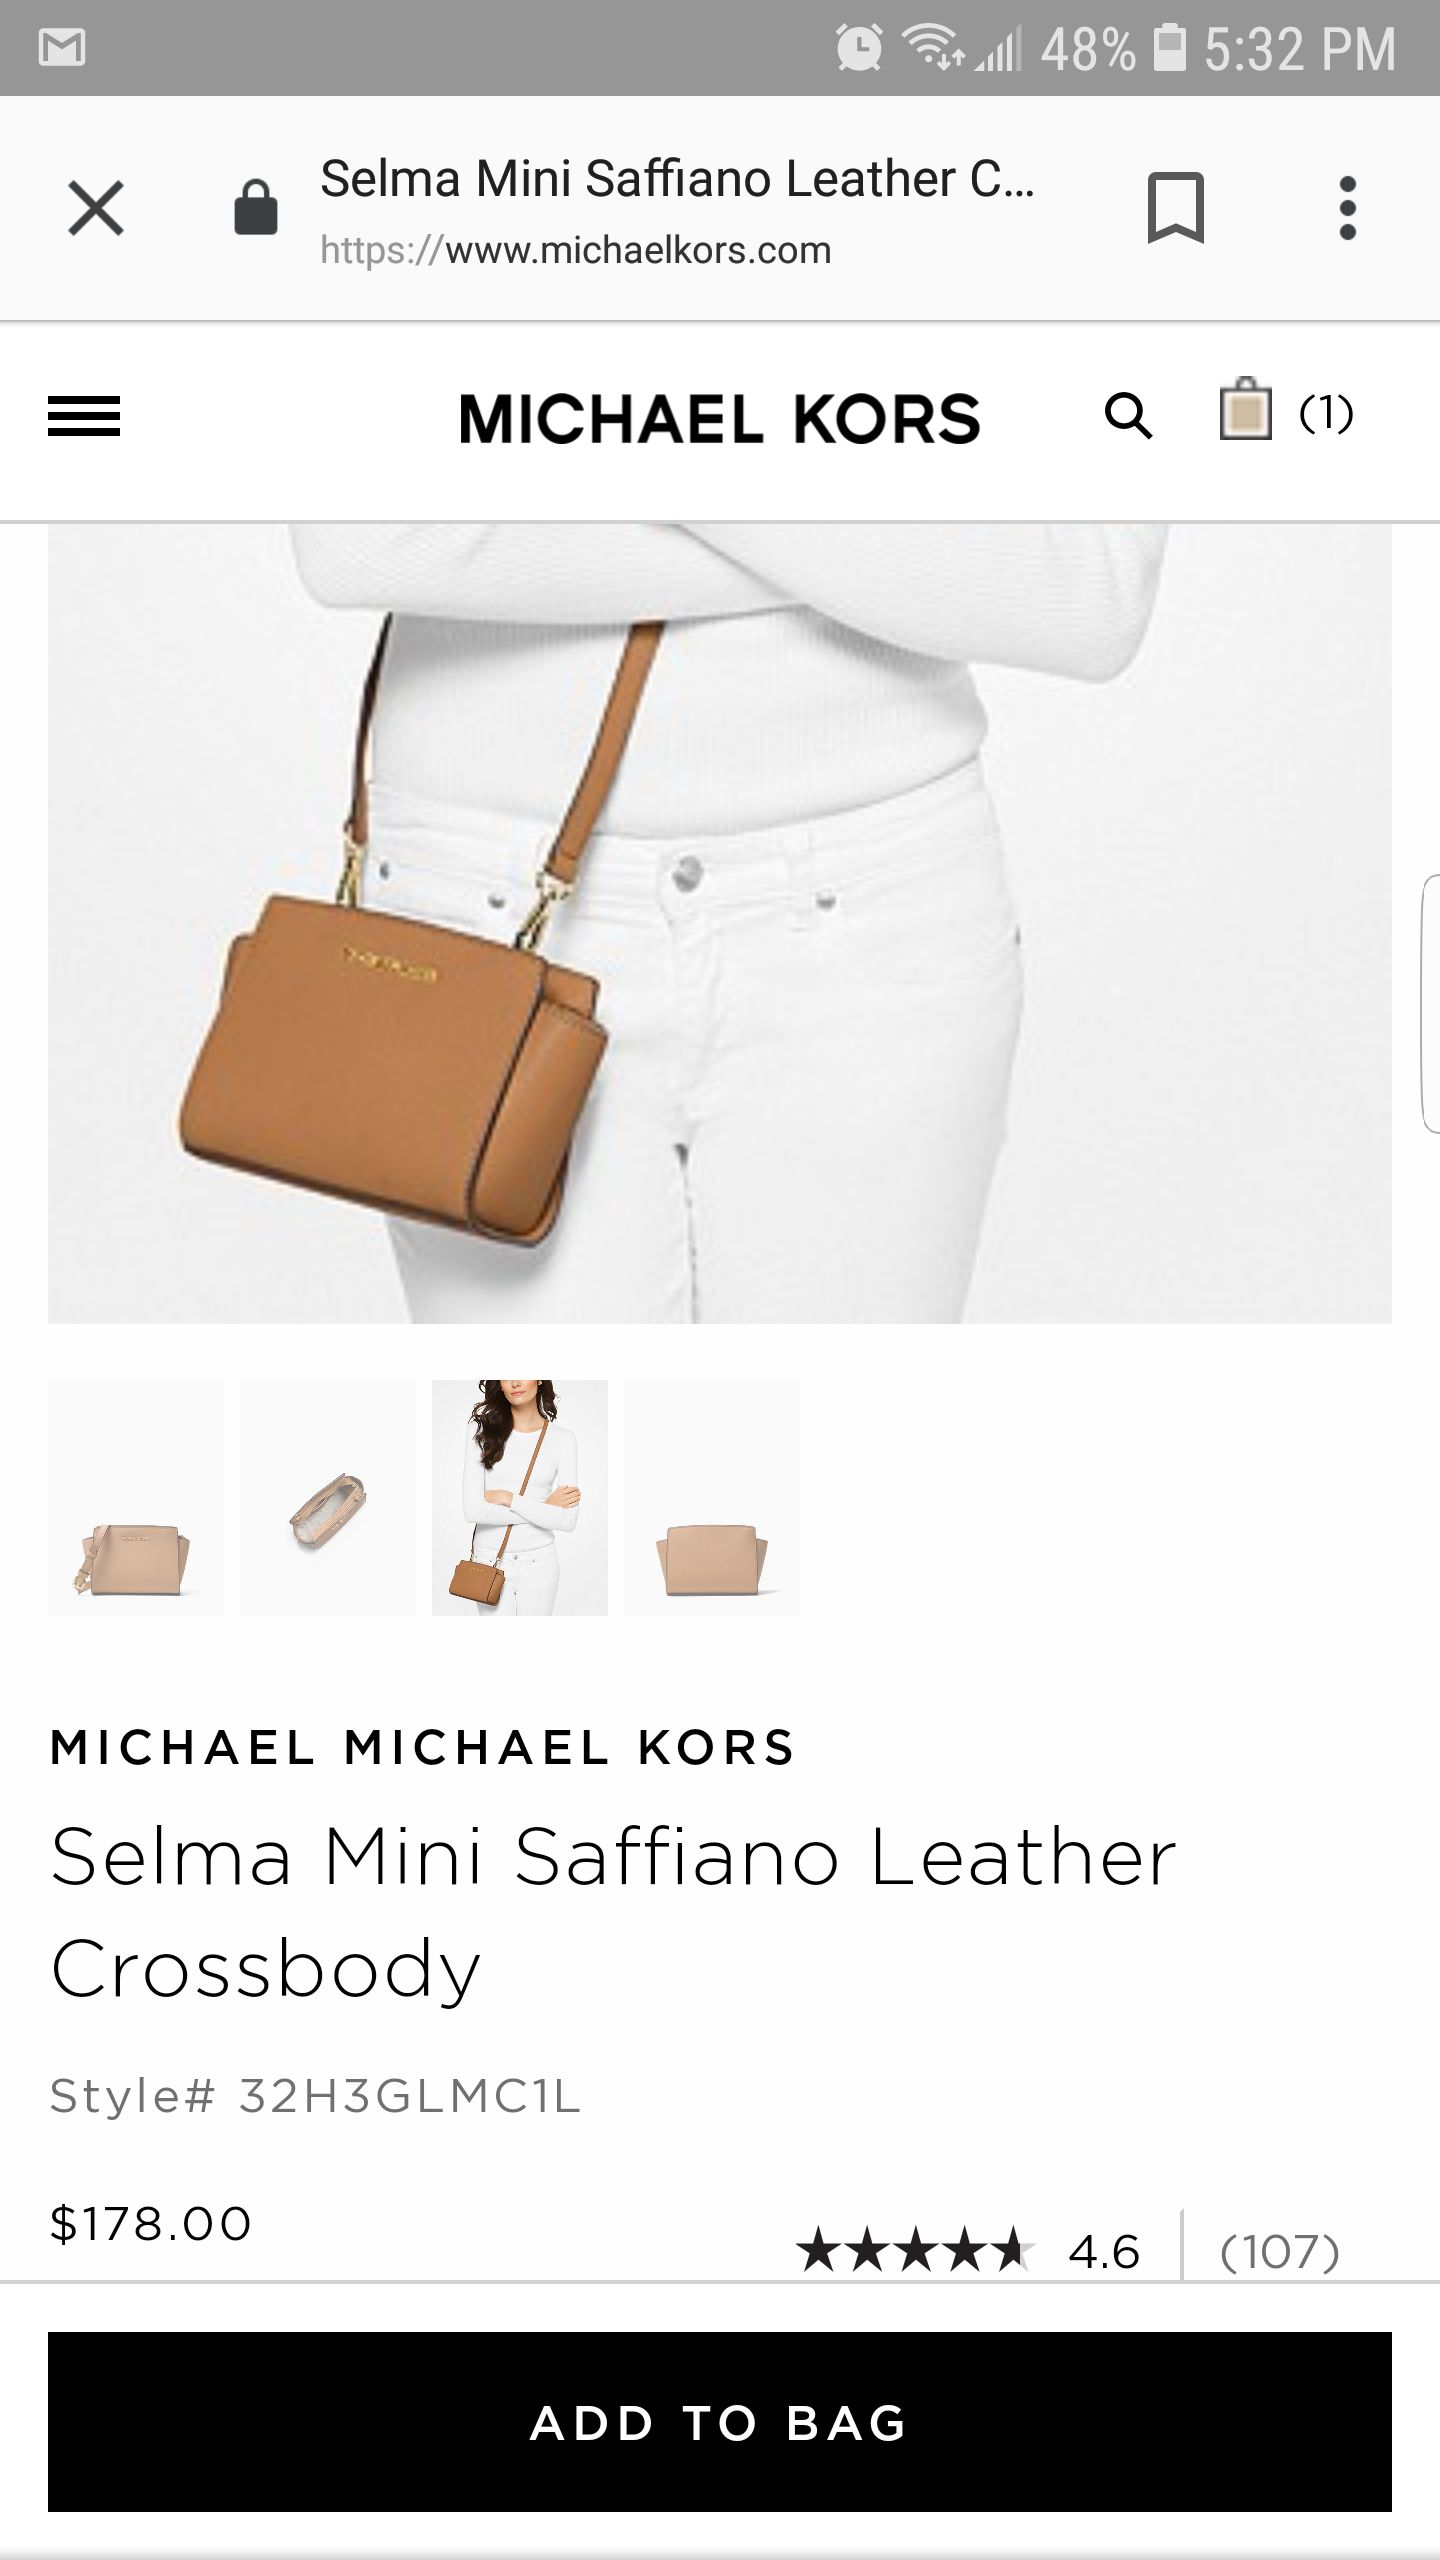 Selma Mini Saffiano Leather Crossbody